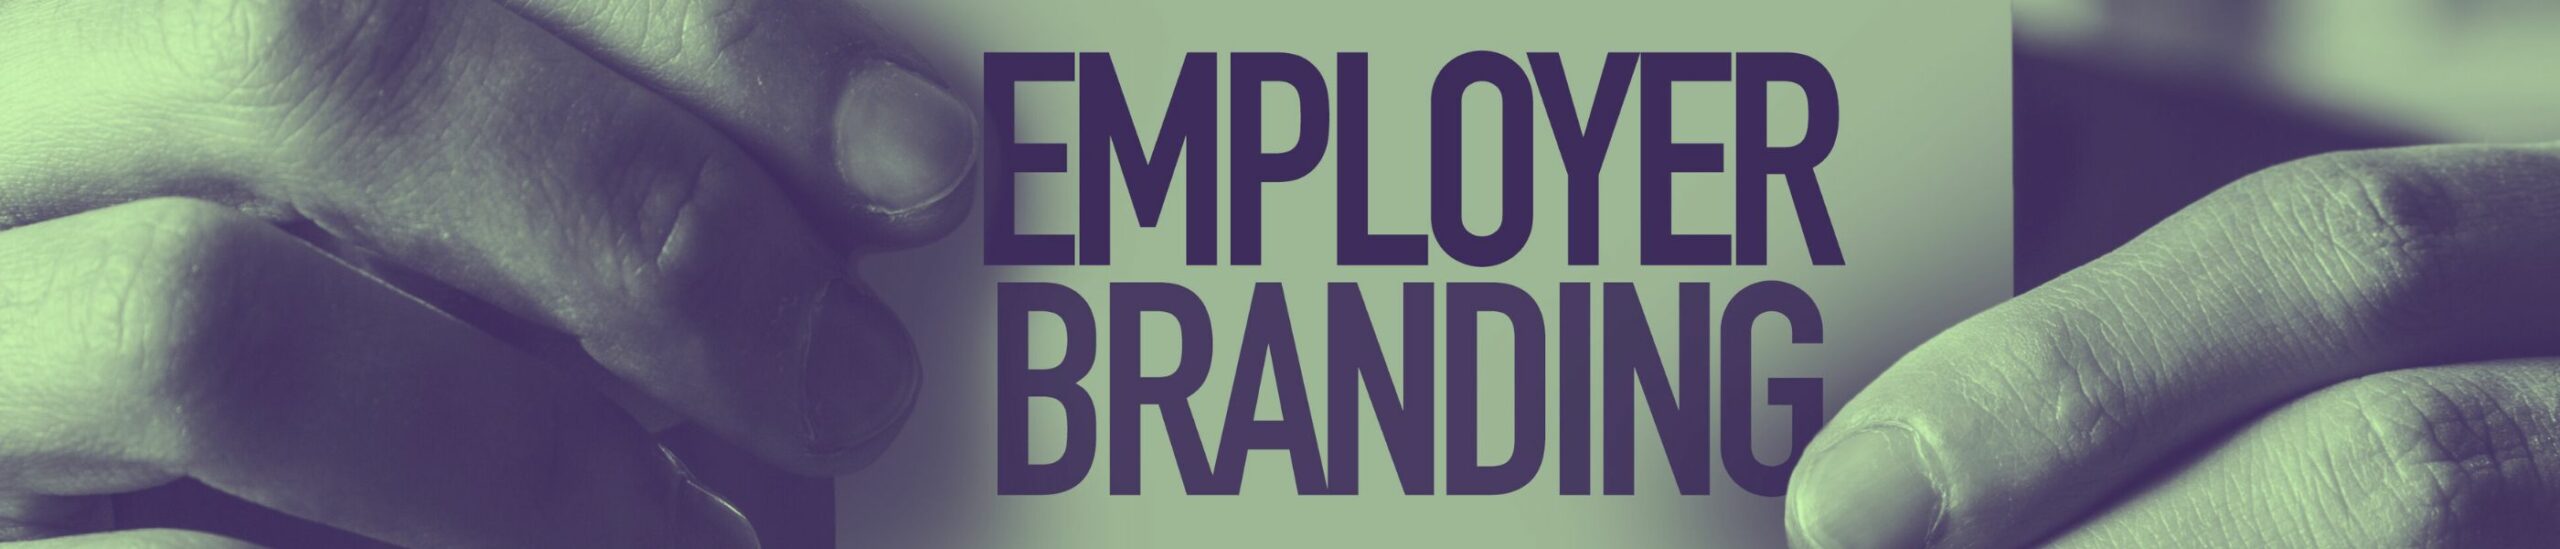 Social Media : Mit cleveren Strategien zum Employer Branding Erfolg!